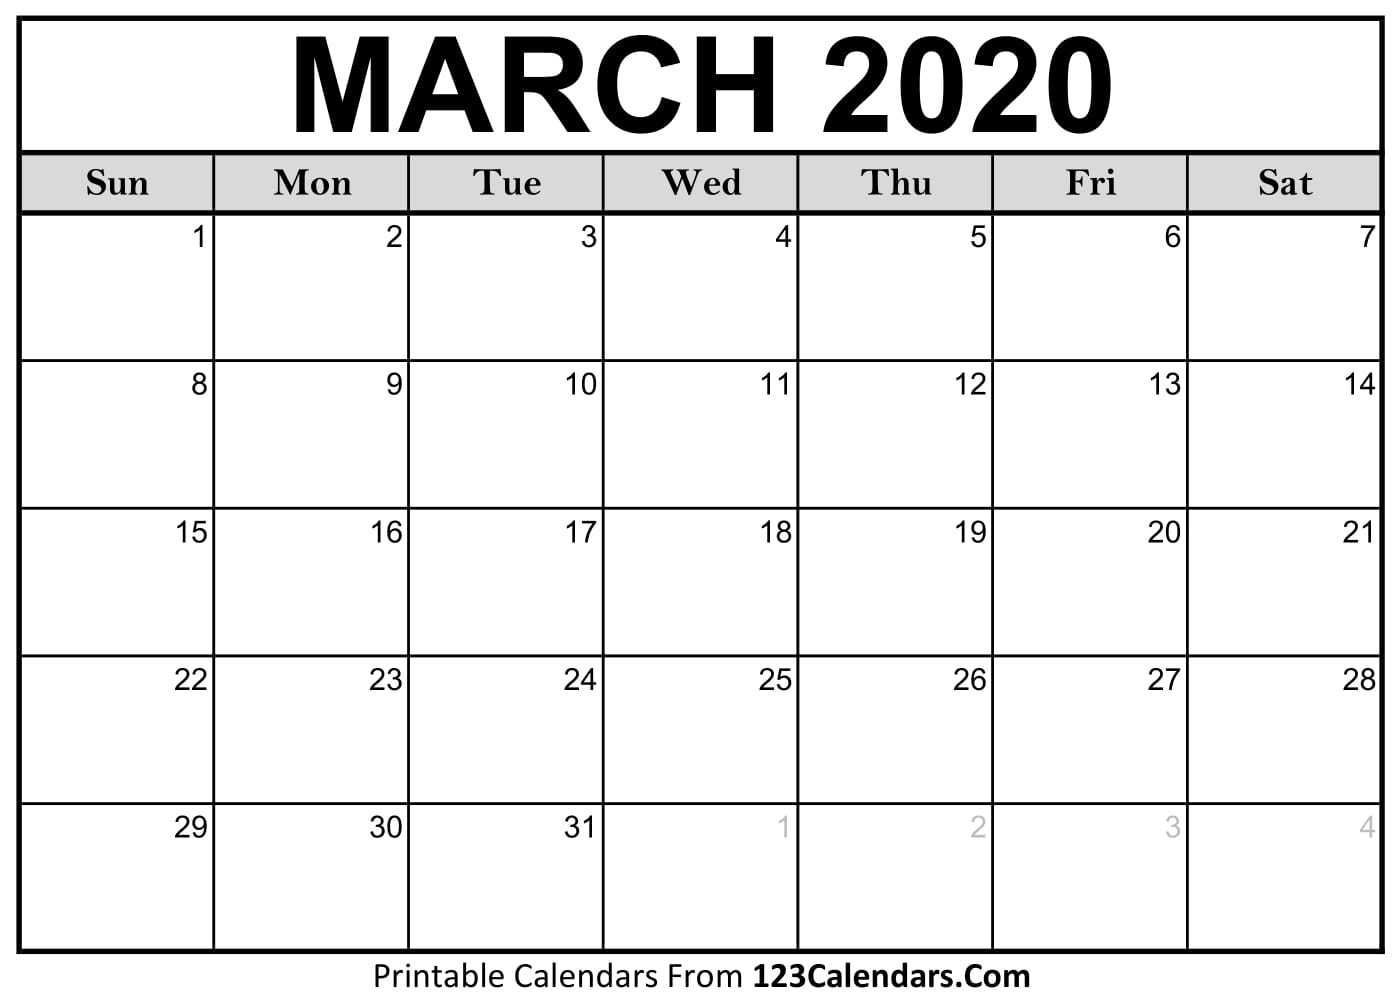 March 2020 Printable Calendar | 123Calendars December 2020 - March 2021 Calendar